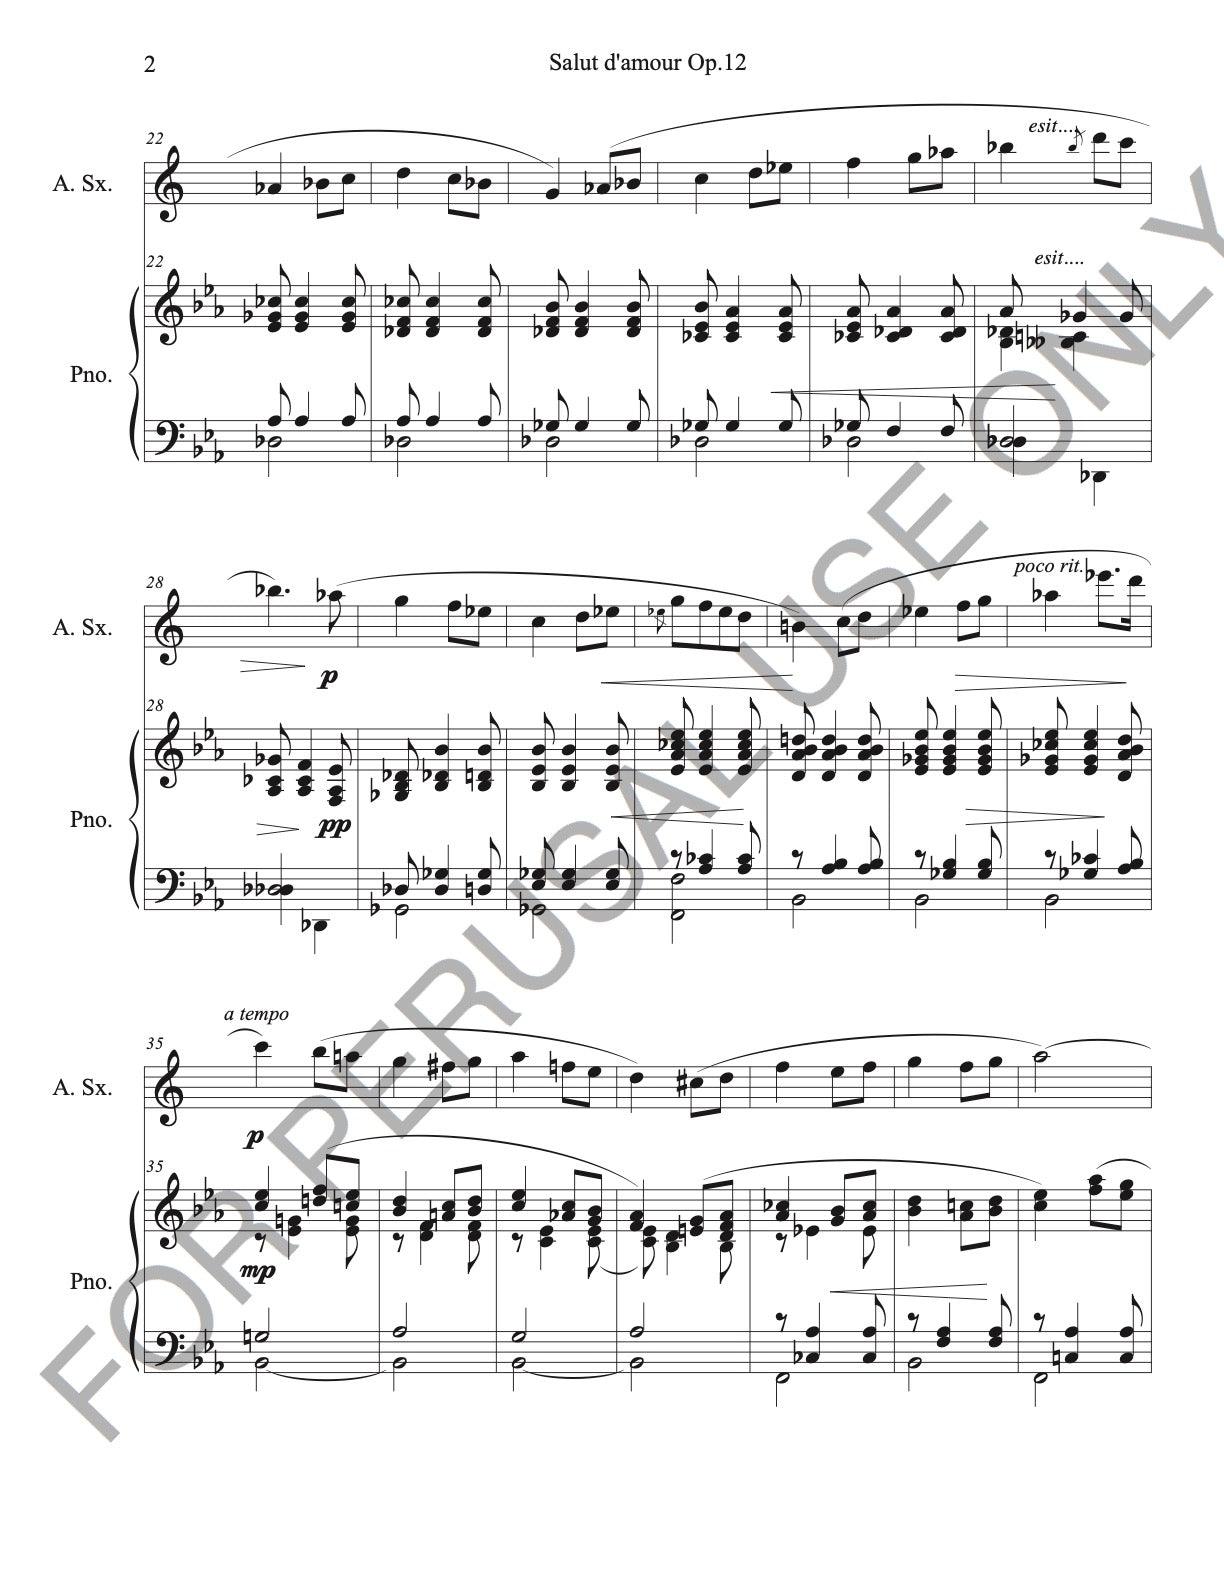 Alto Sax and Piano sheet music: Elgar's Salut d'Amour - ChaipruckMekara